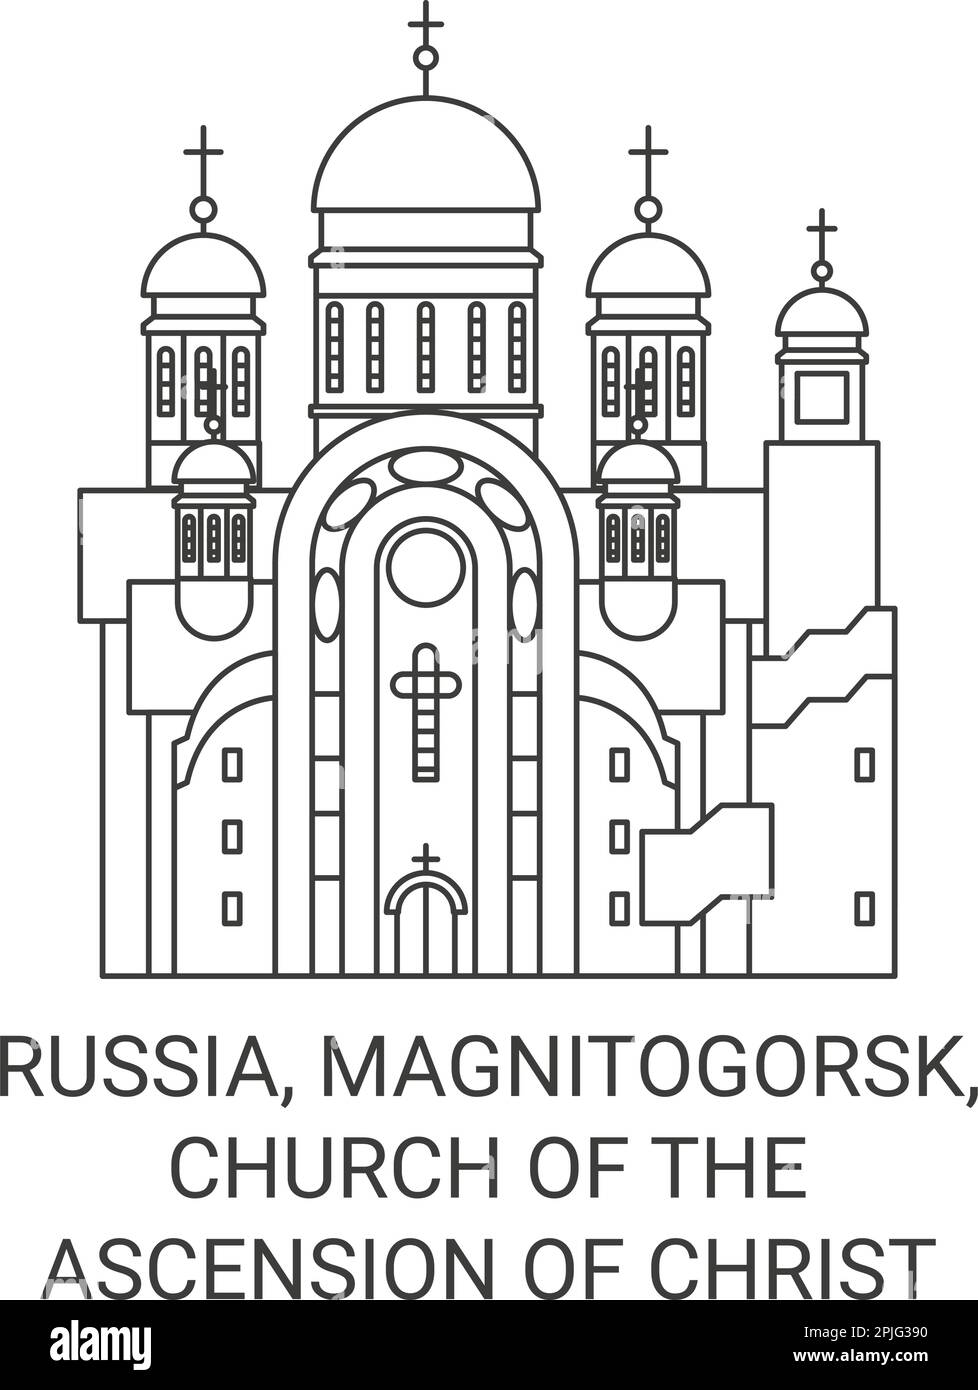 Russland, Magnitogorsk, Kirche des Aufstiegs Christi Magnitogorsk reisen als Vektorbild Stock Vektor